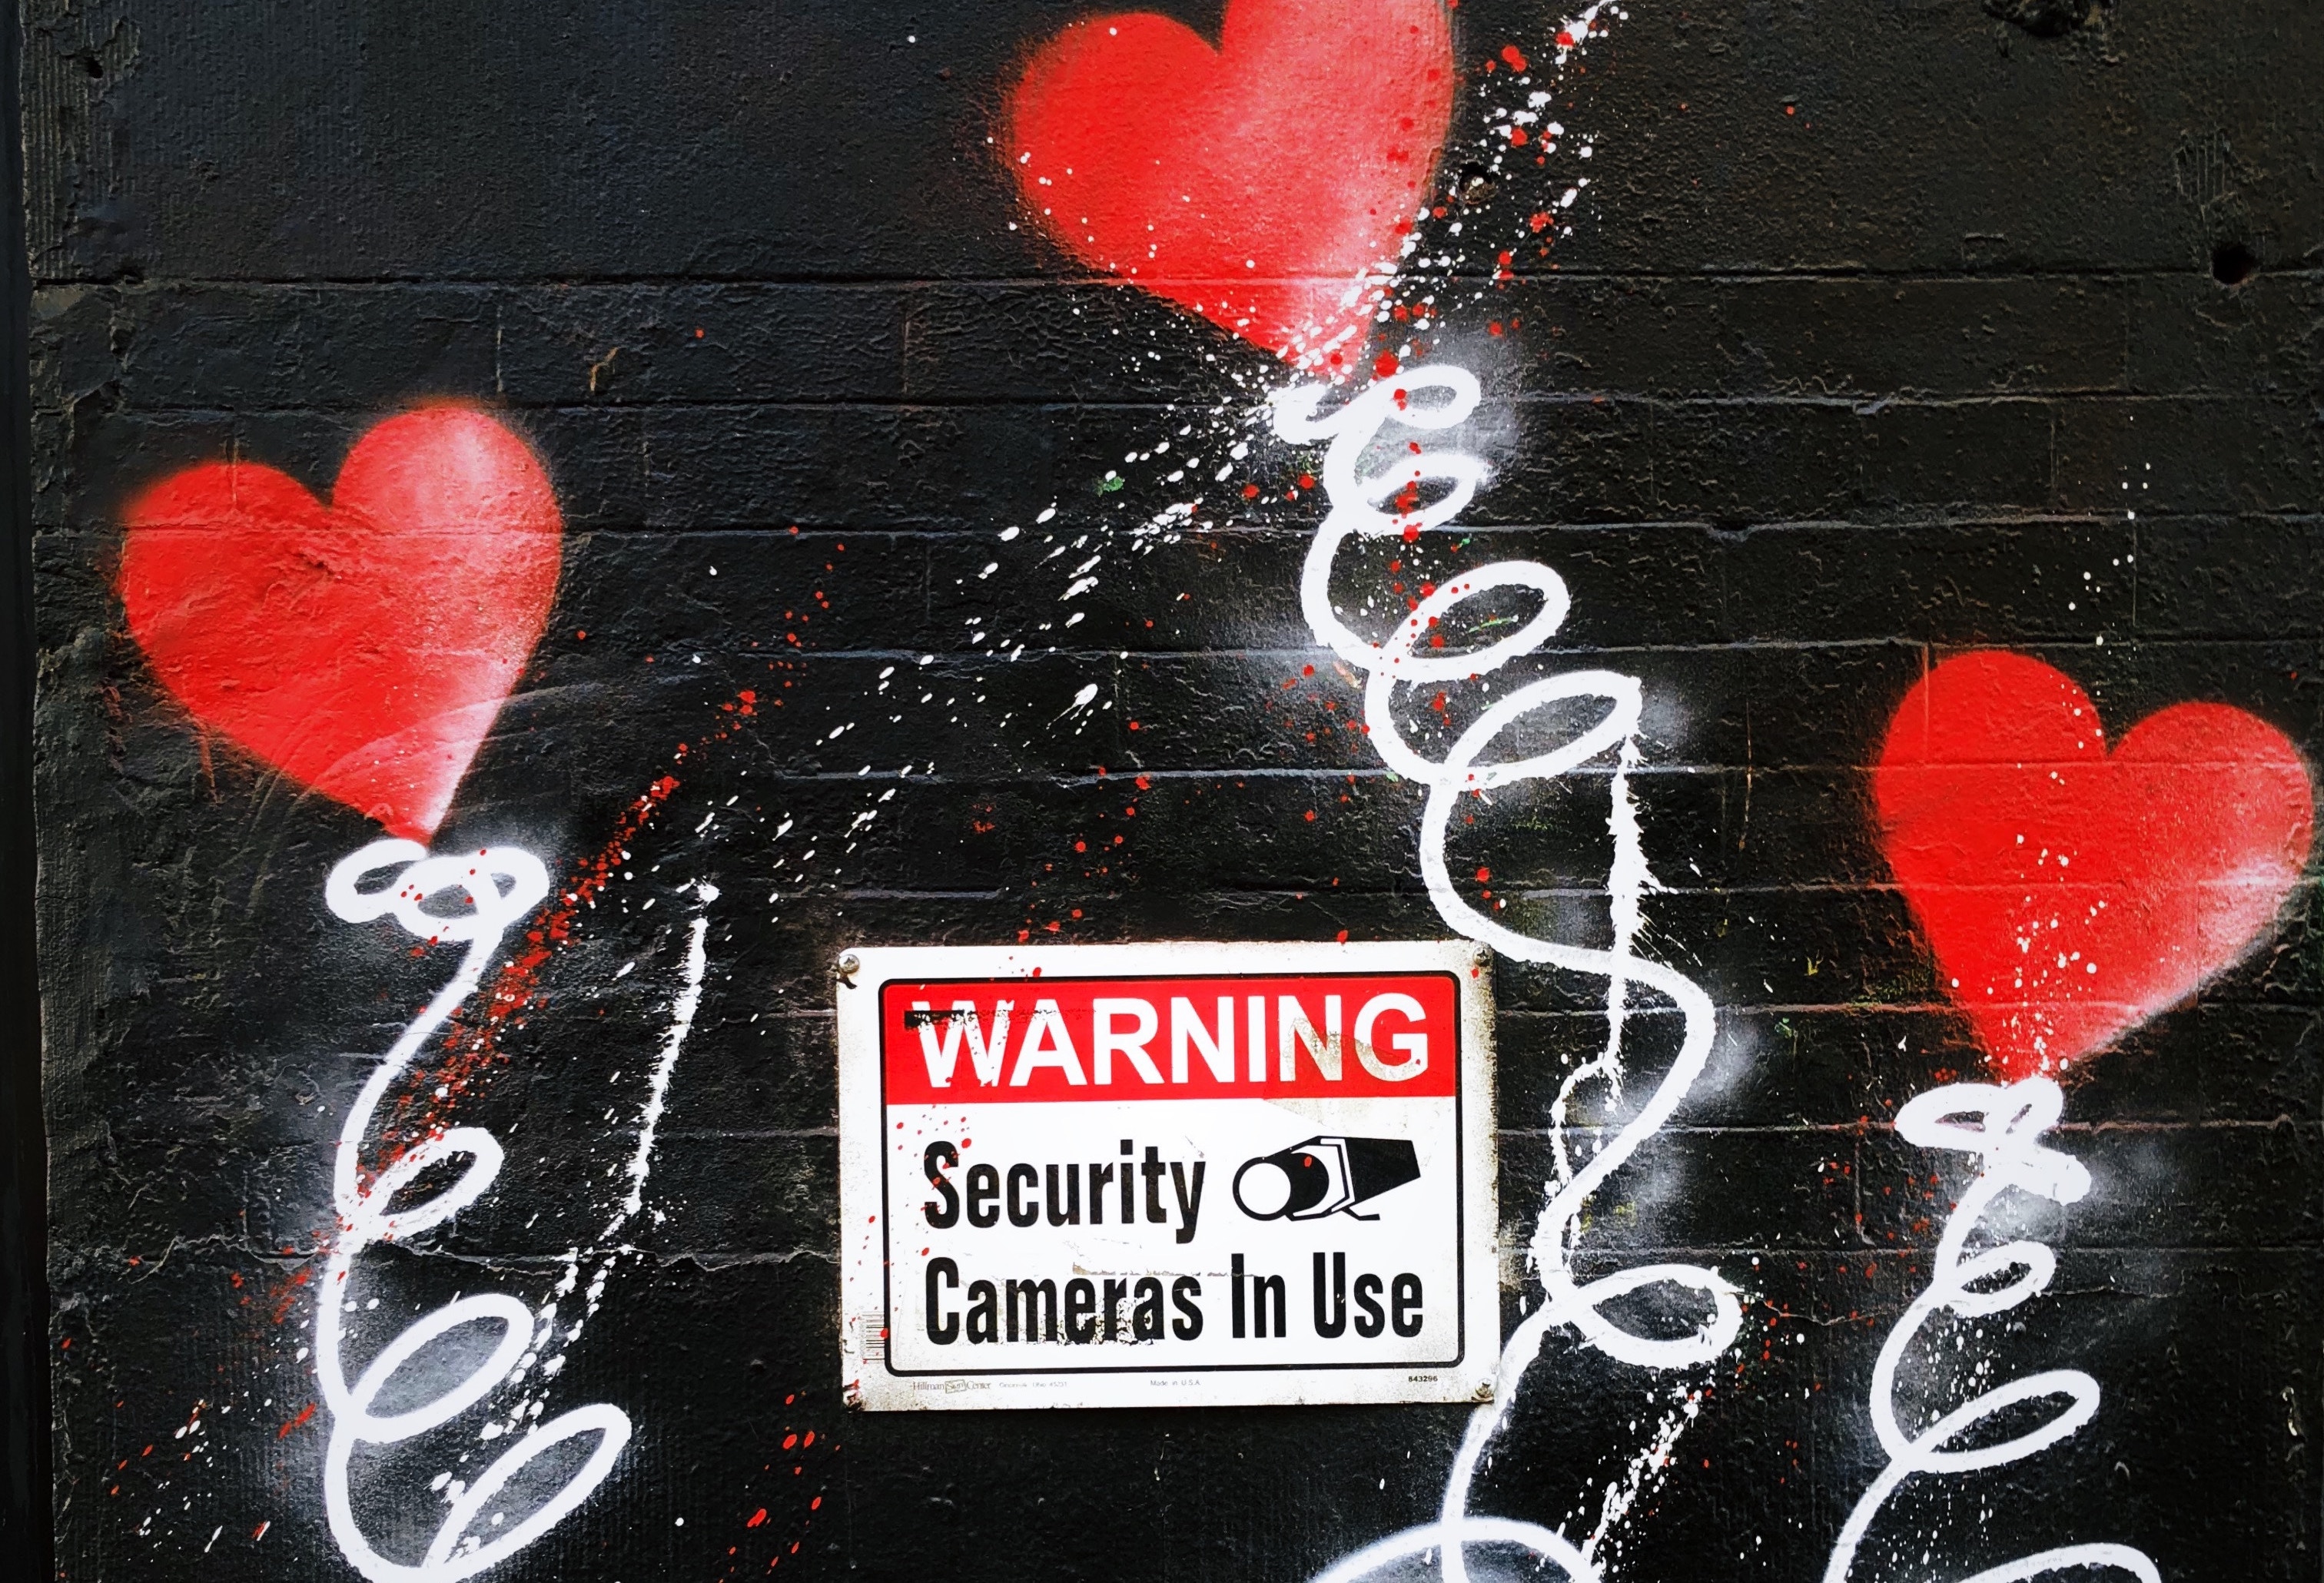 Warning sign with graffiti